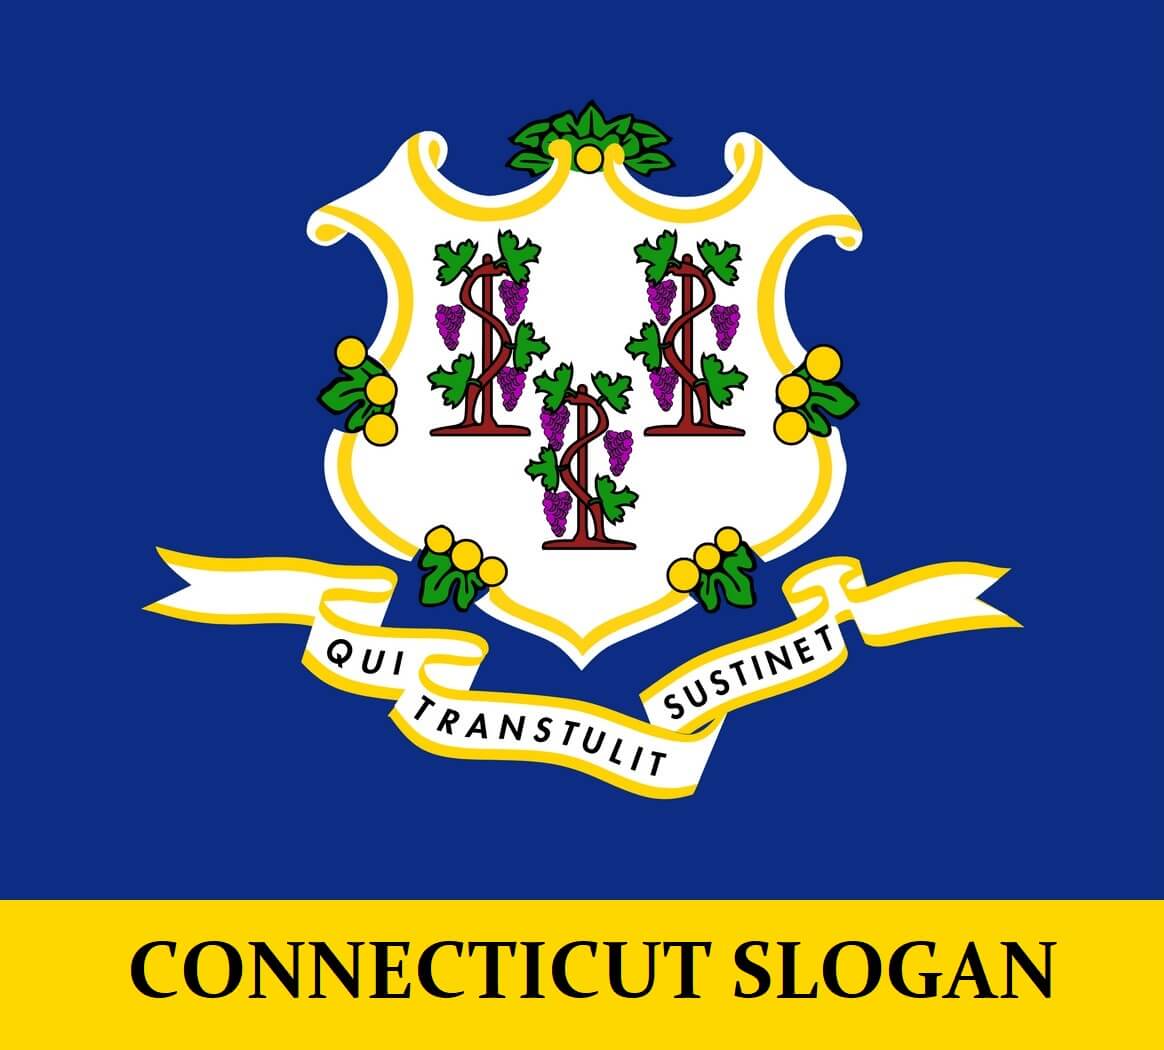 Slogan for Connecticut